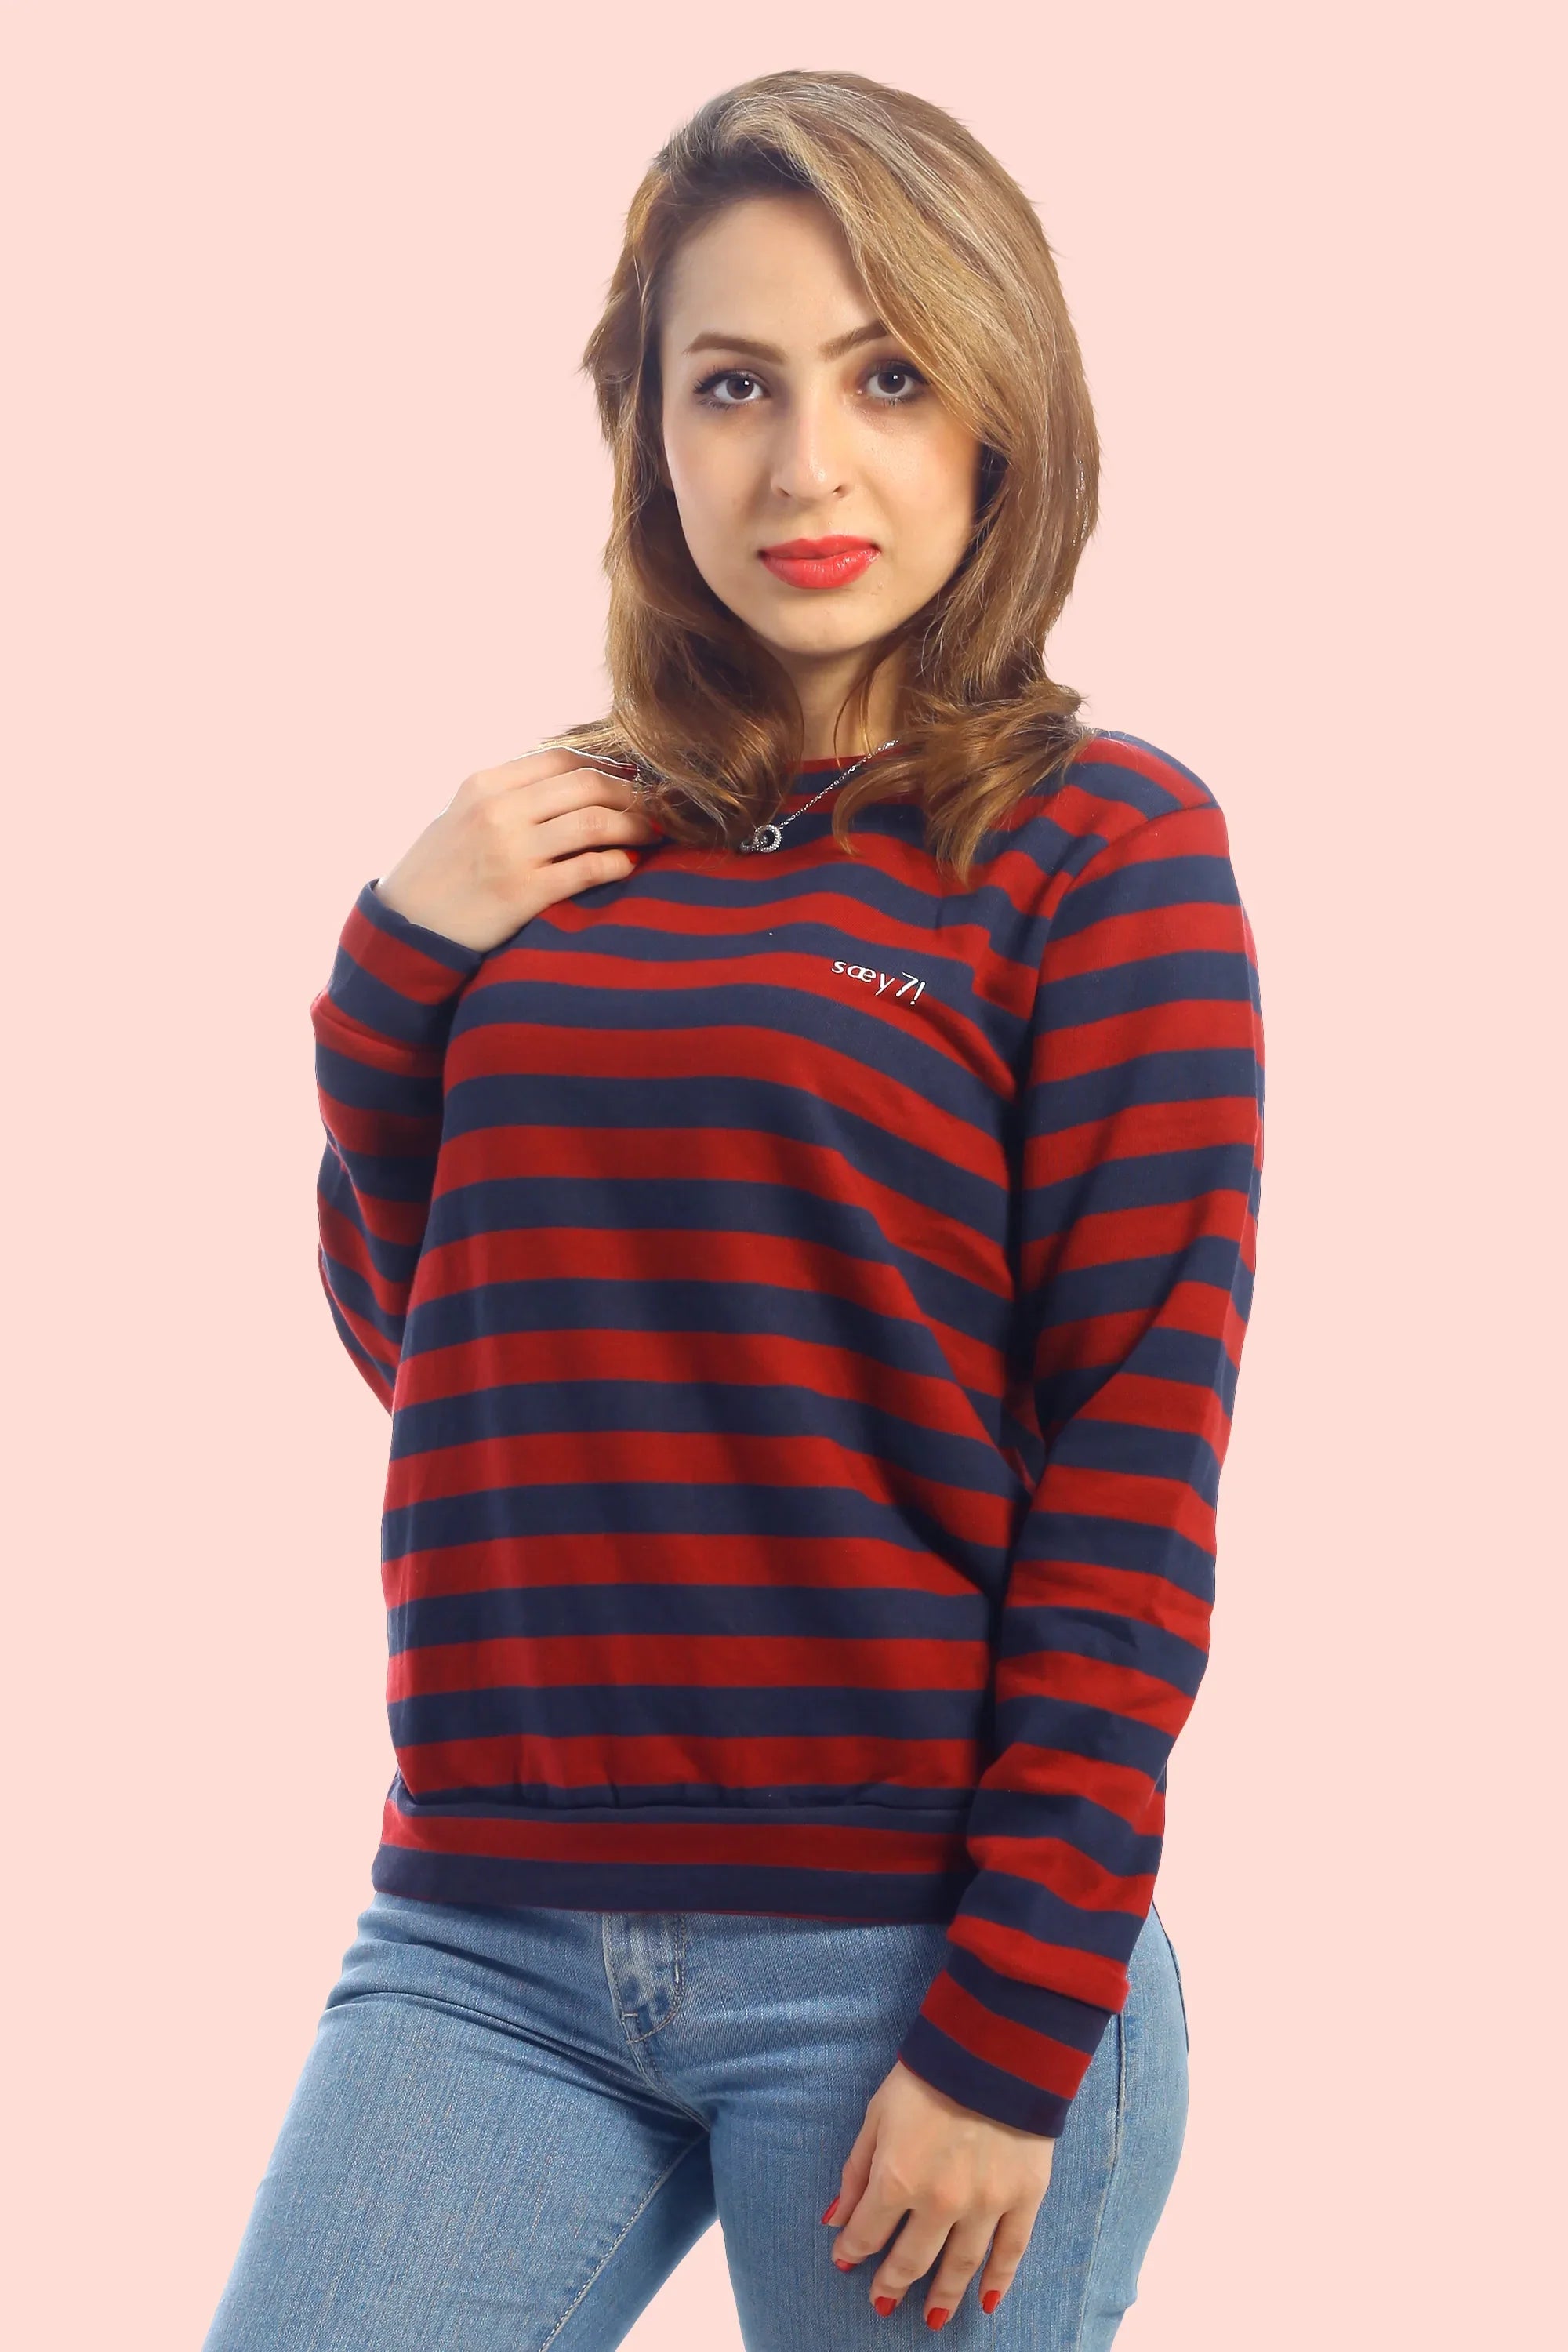 RUE NOEL - Cherry Red/Navy Stripes Sweatshirt (UNISEX) - saey7